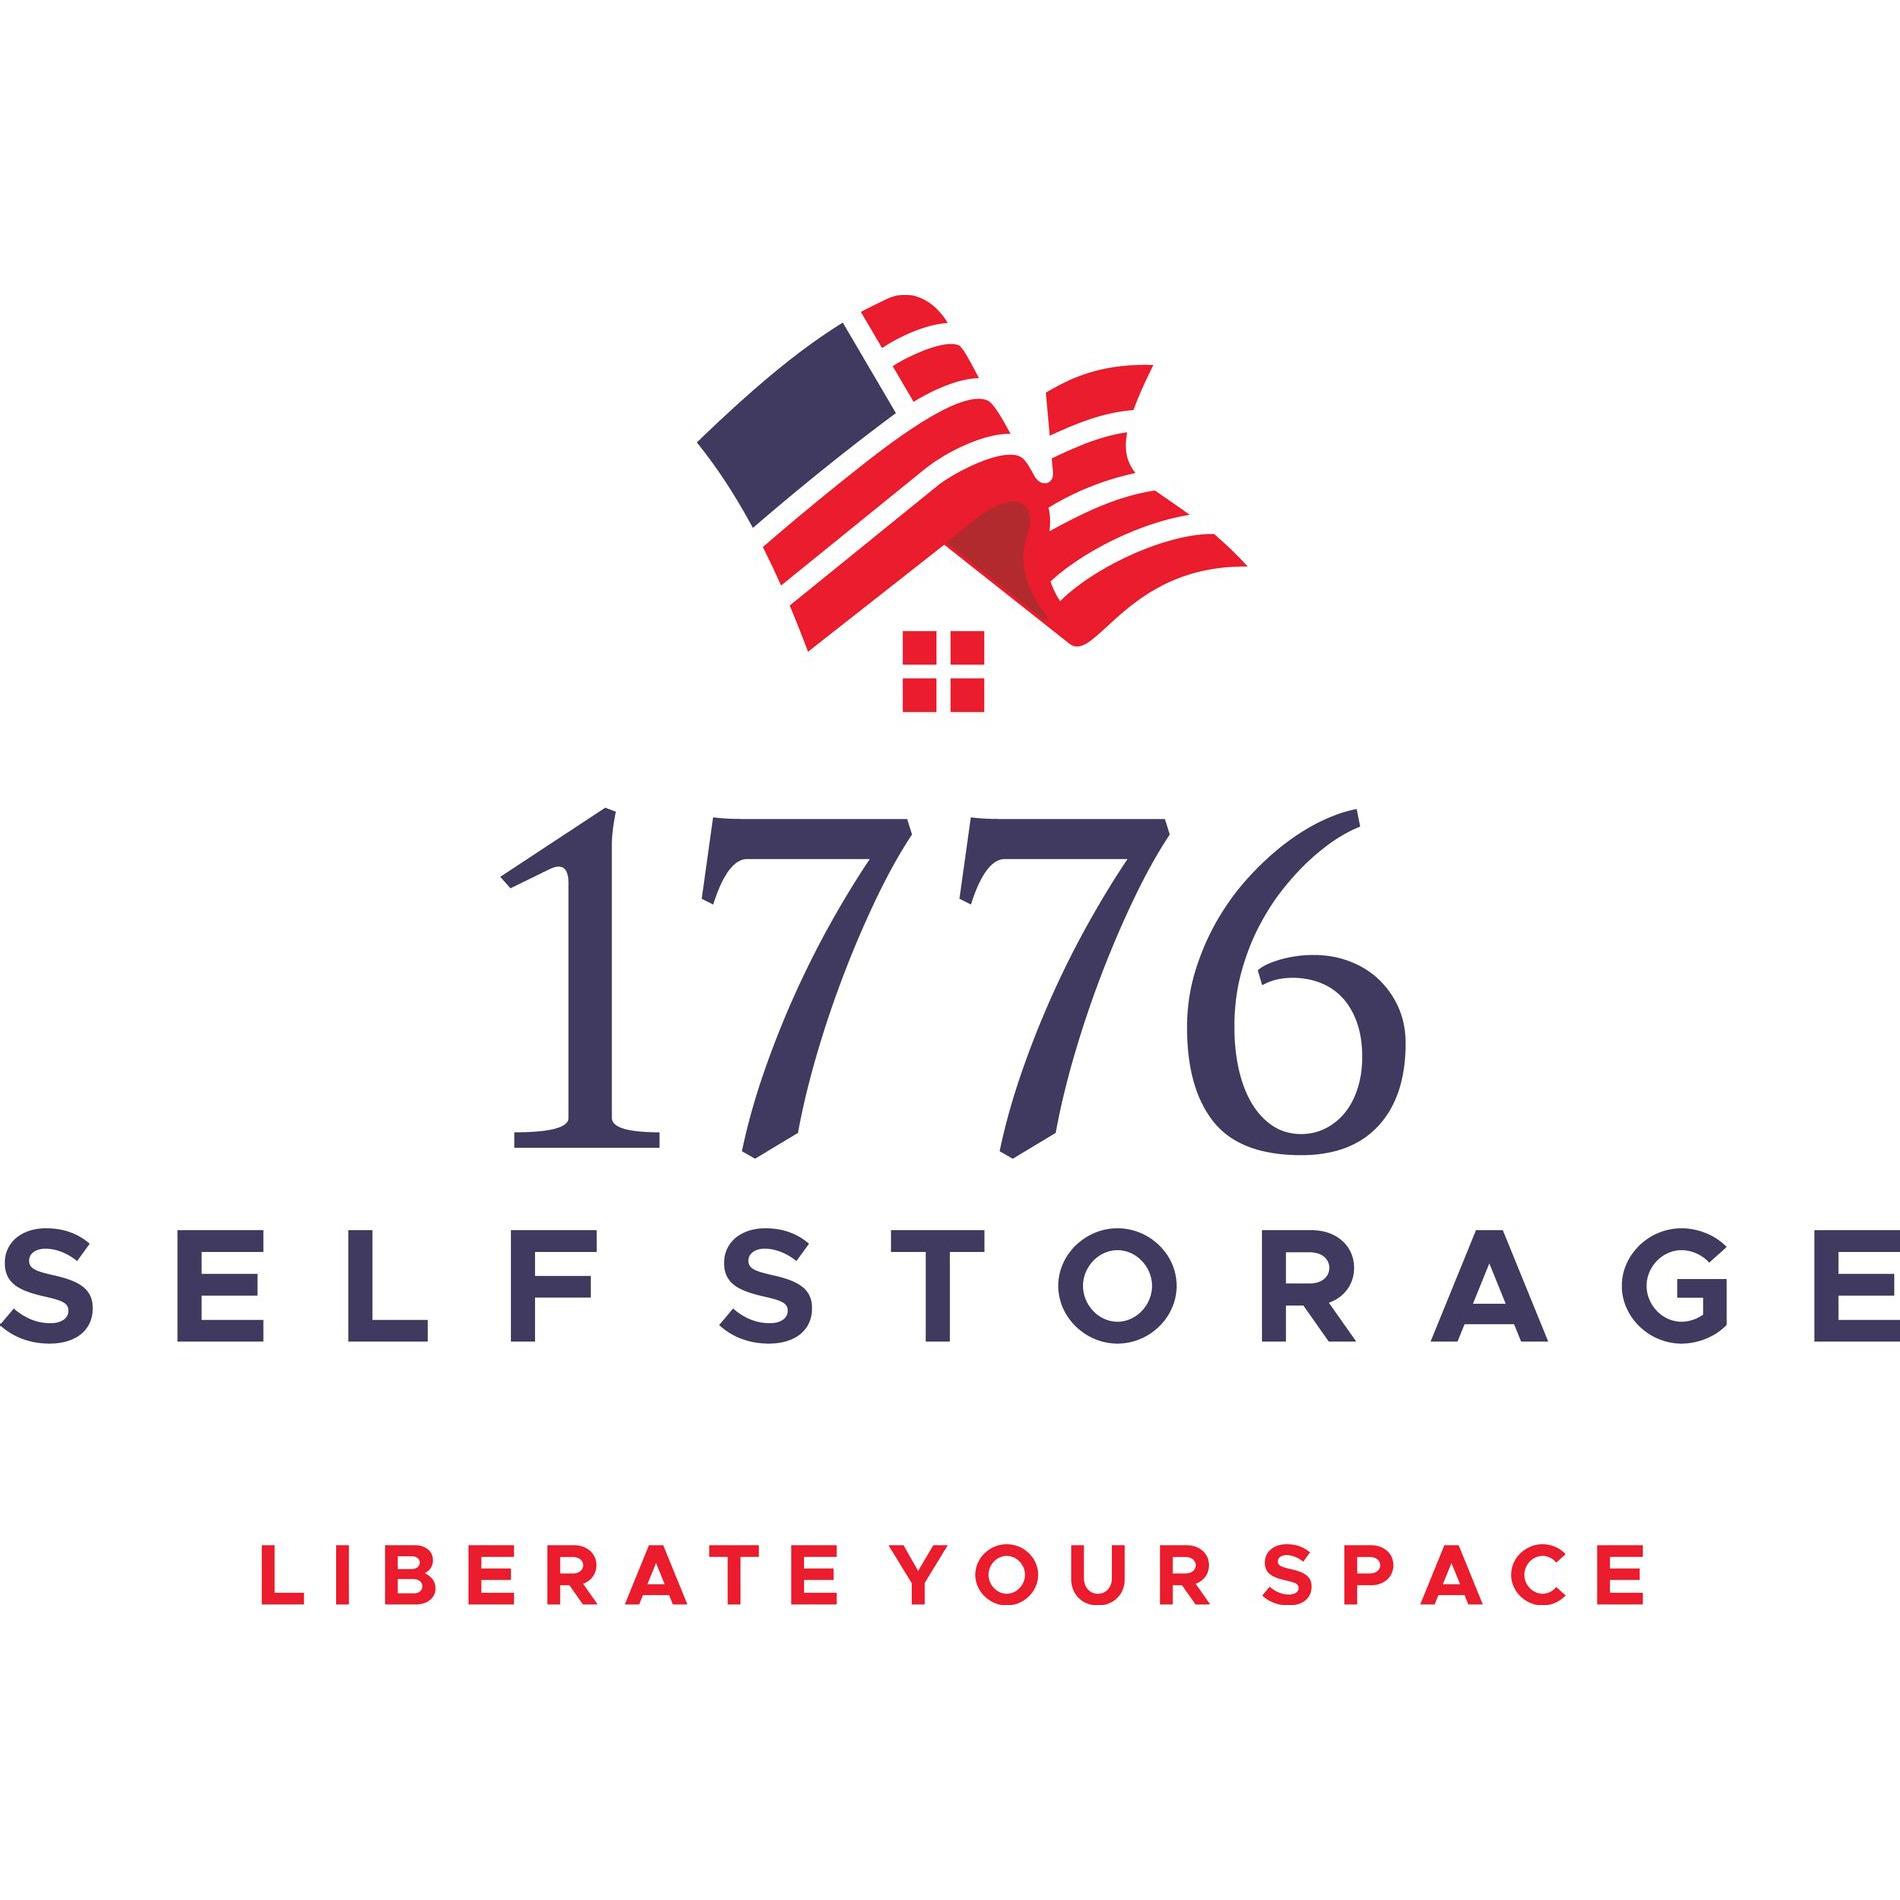 1776 Self Storage - Cookeville, TN 38506 - (931)432-1776 | ShowMeLocal.com